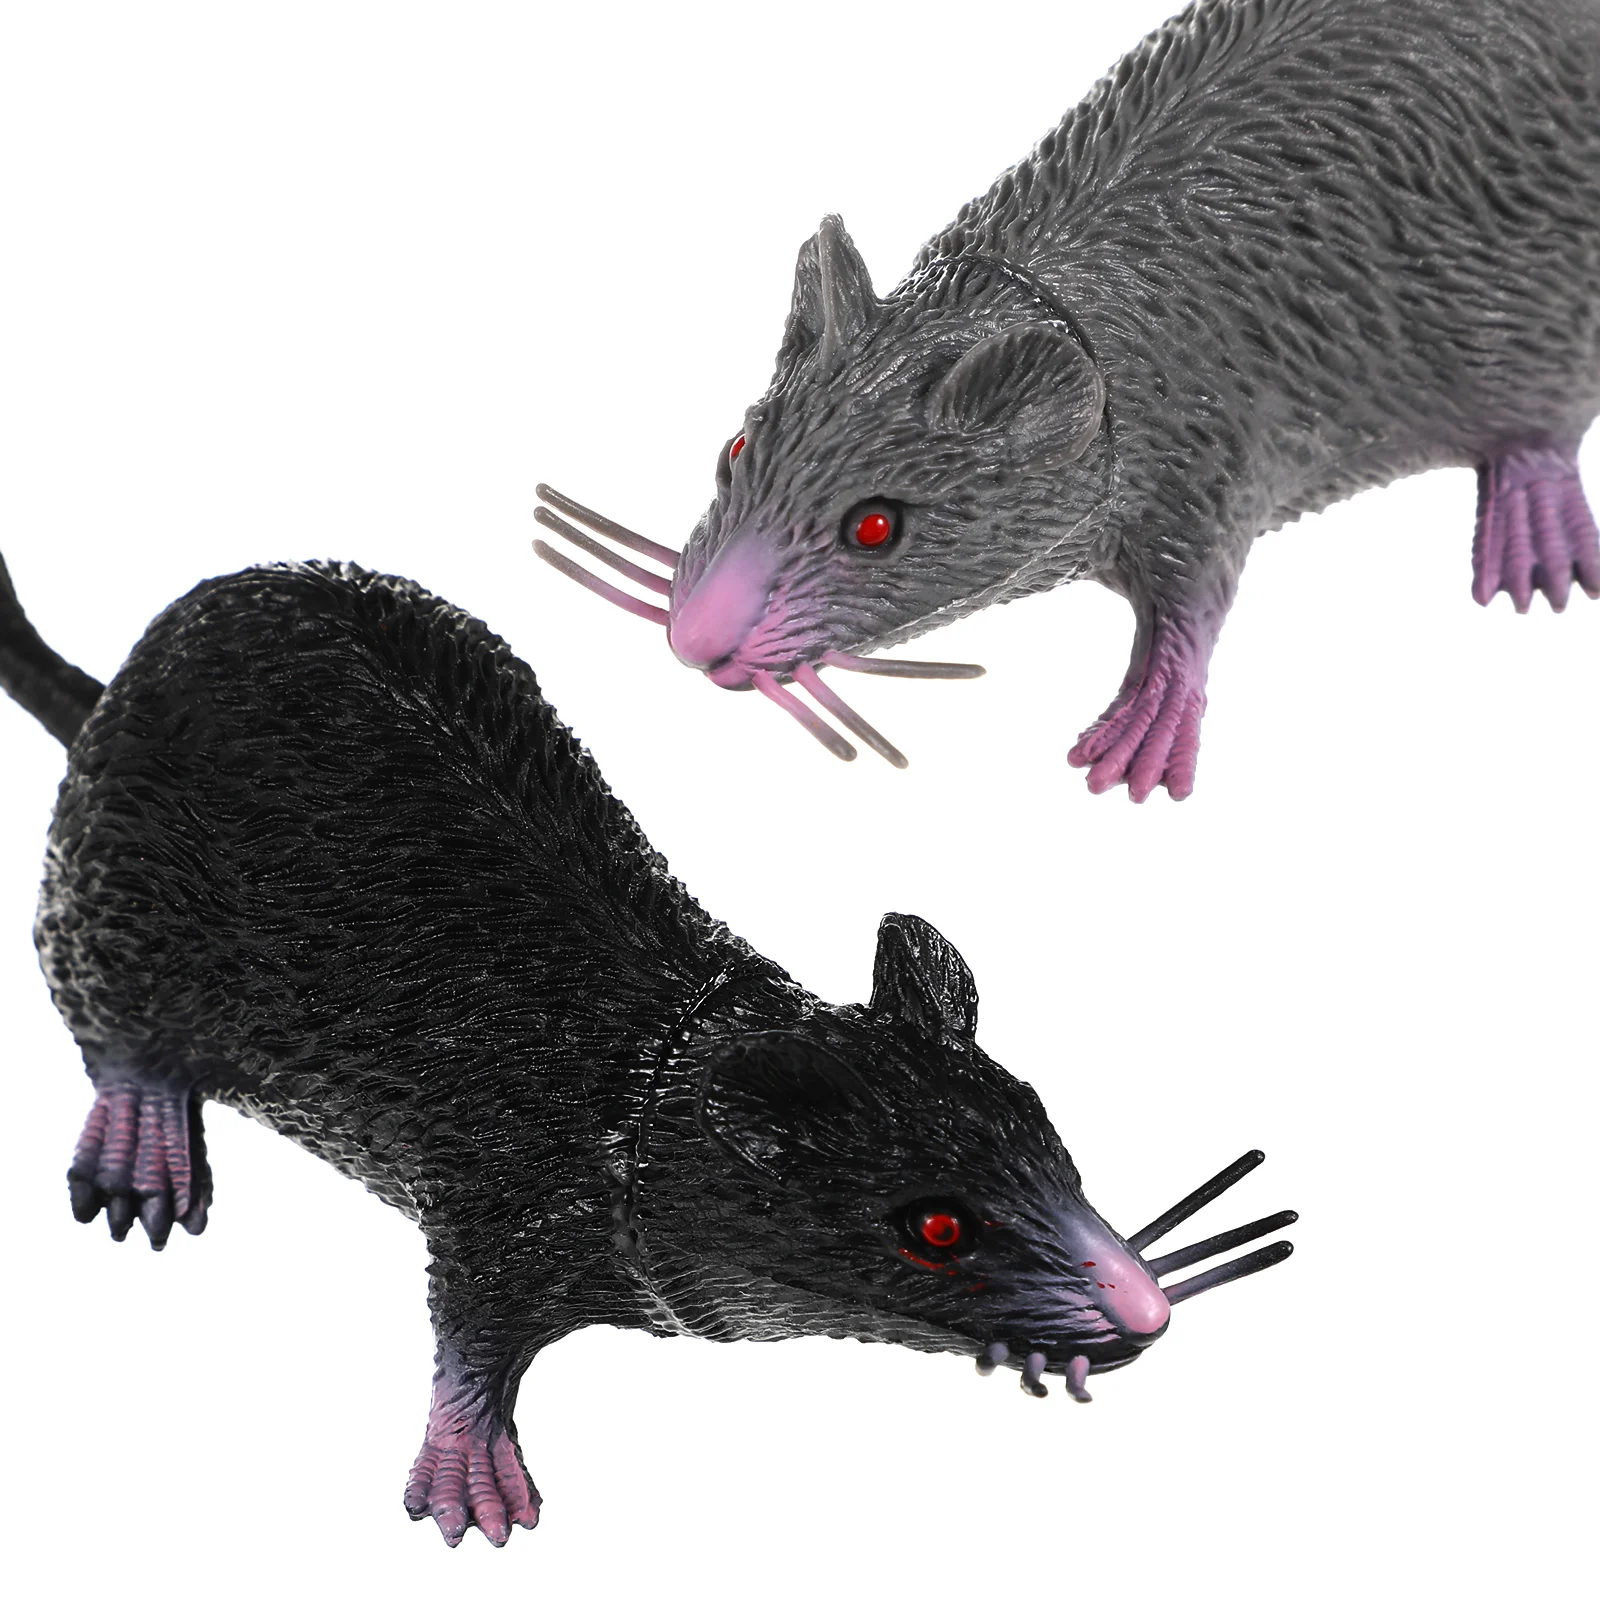 

2 Pcs Realistic Simulation Mice Lifelike Creepy Simulation Mice Spooky Fake Rat Figures Tricks Pranks Props